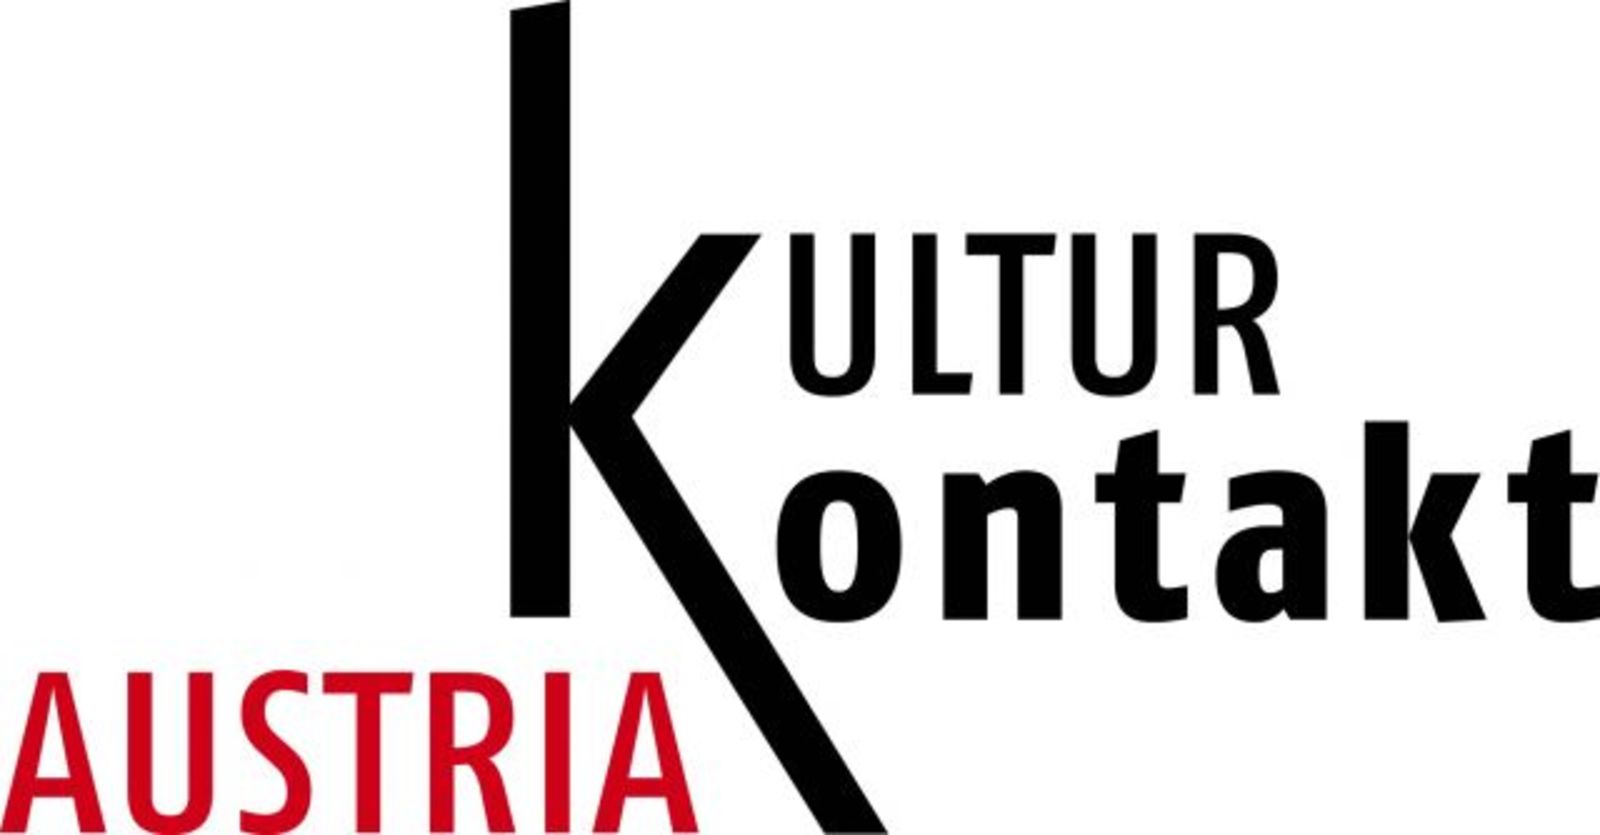 Kultur Kontakt announces an open call - opportunity for "Artist Residency" for 2015 in Vienna, Austria